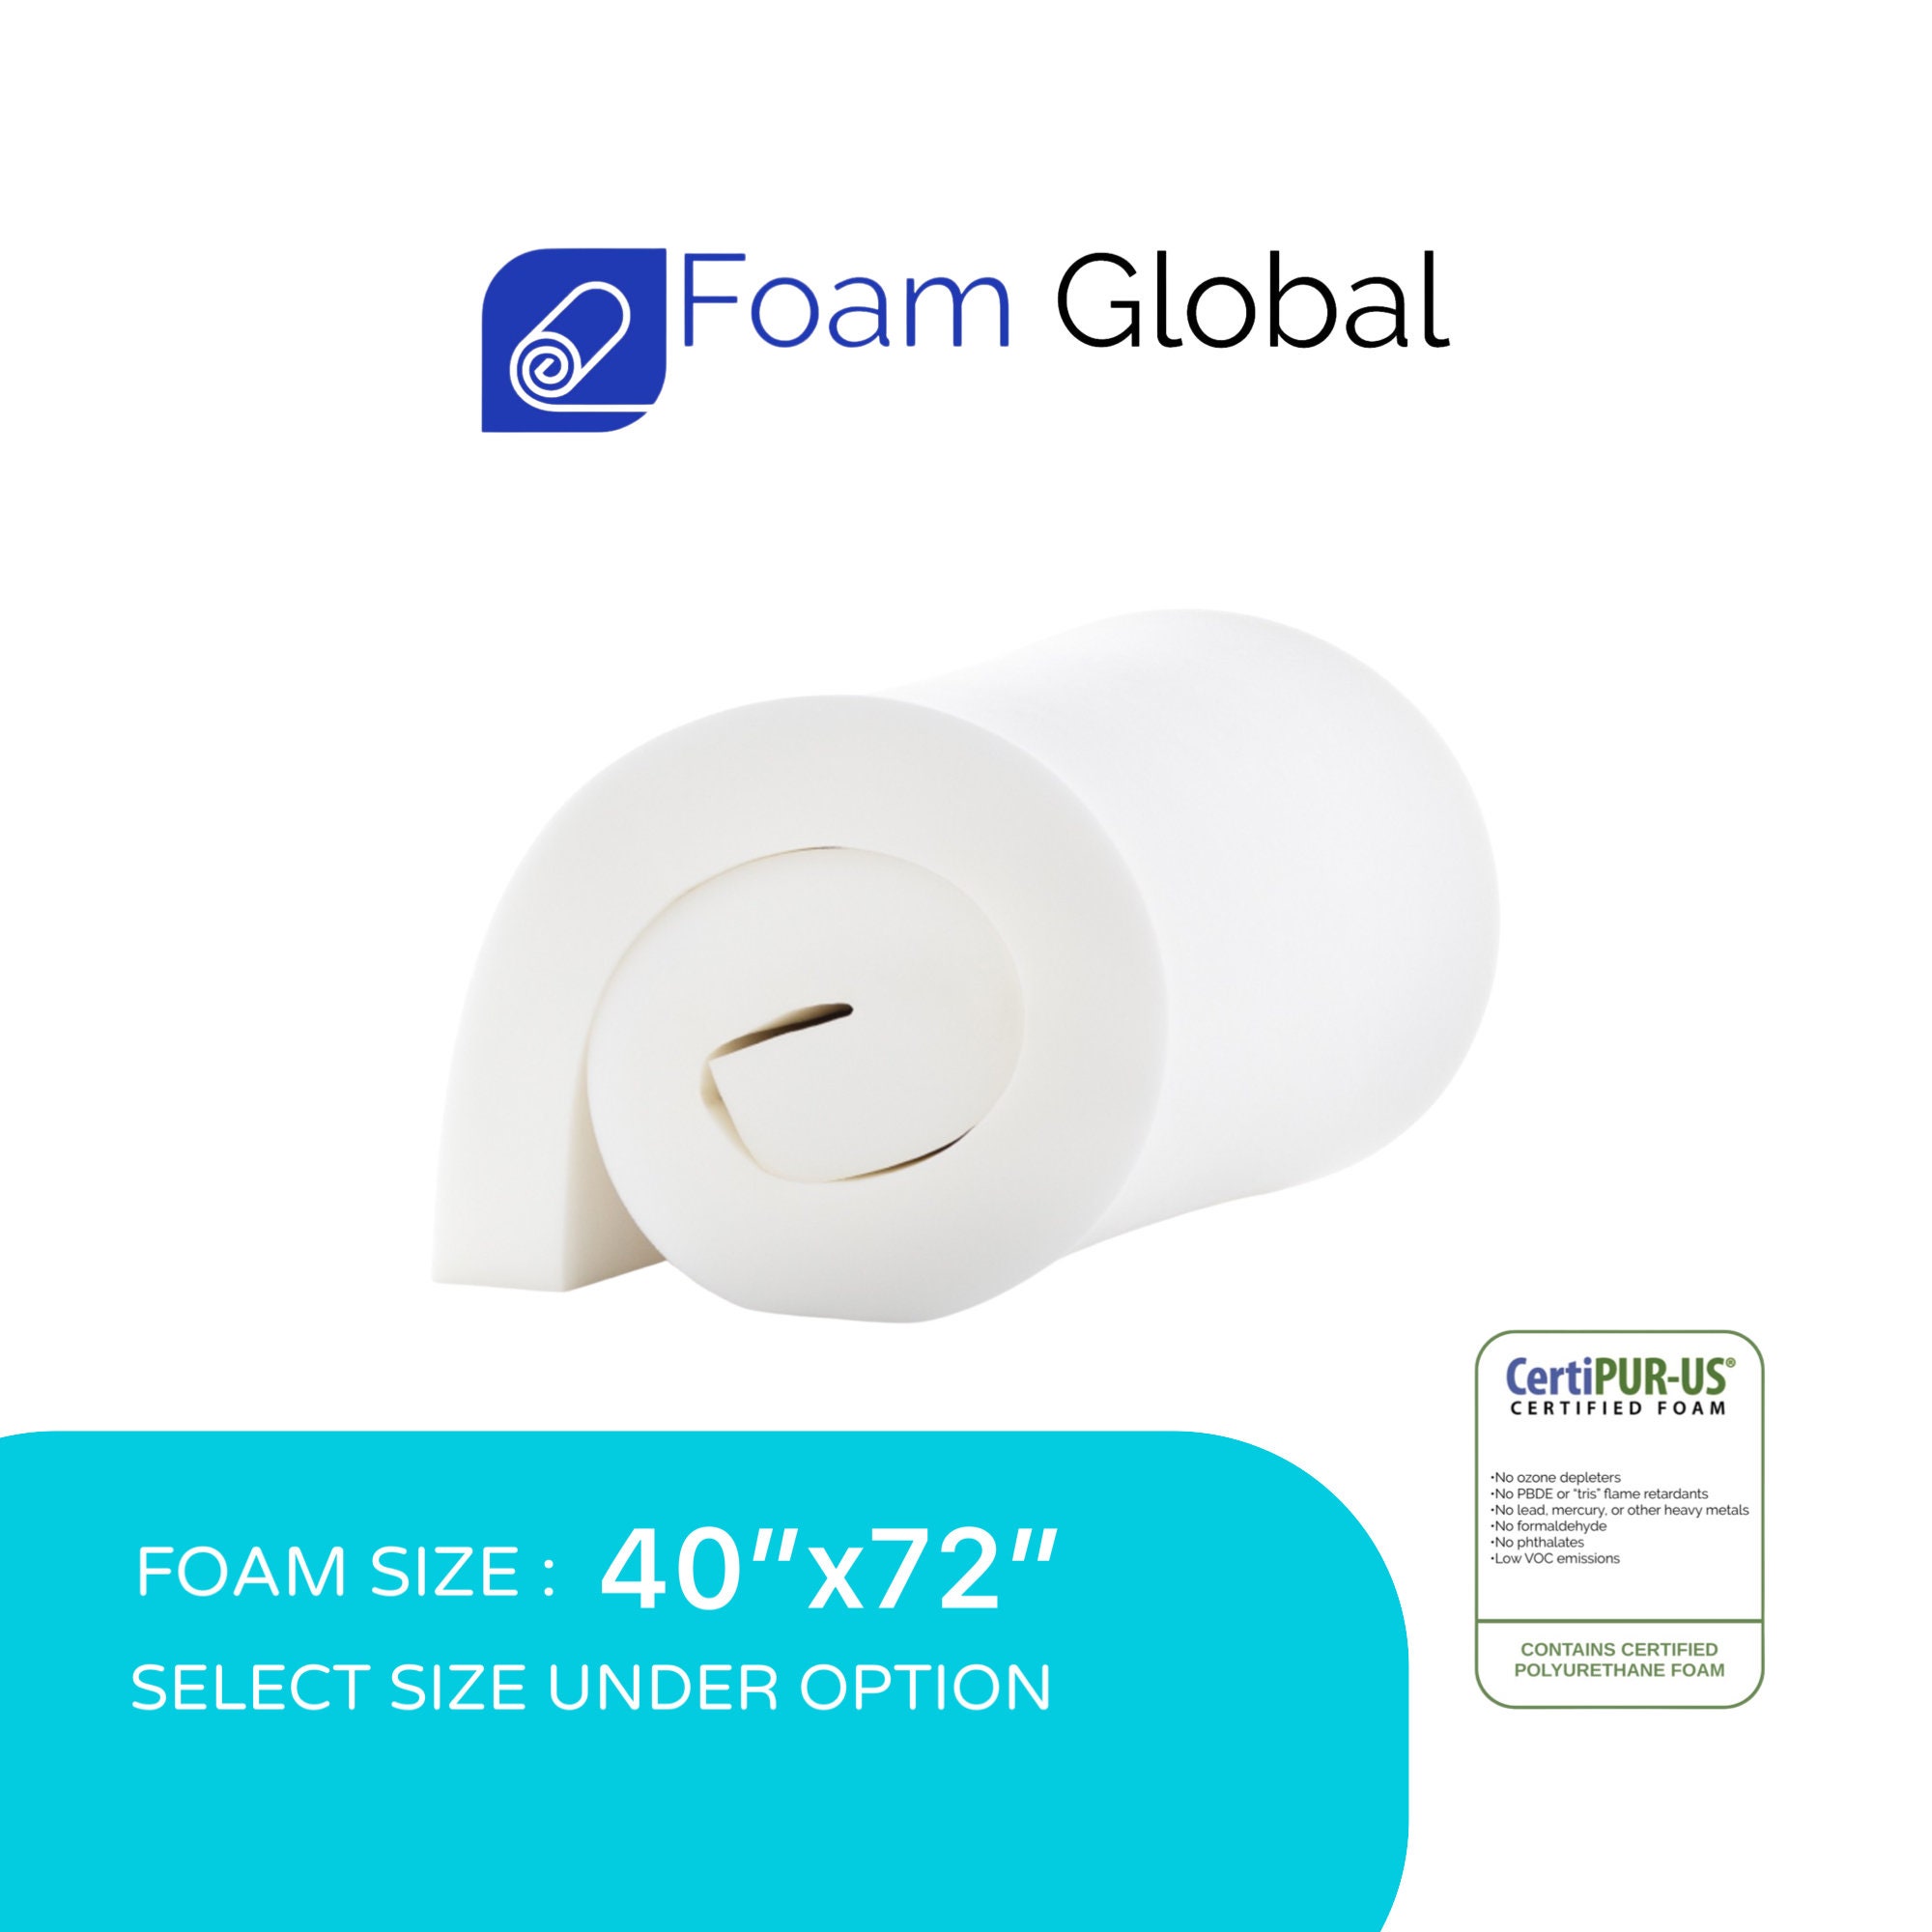 Frienda 59 Inches Wide 3 Yards Long Foam Padding Thick Foam Polyethylene  Foam Customizable Foam Insert Upholstery Foam Cushion (Gray,1/2 Inch Thick)